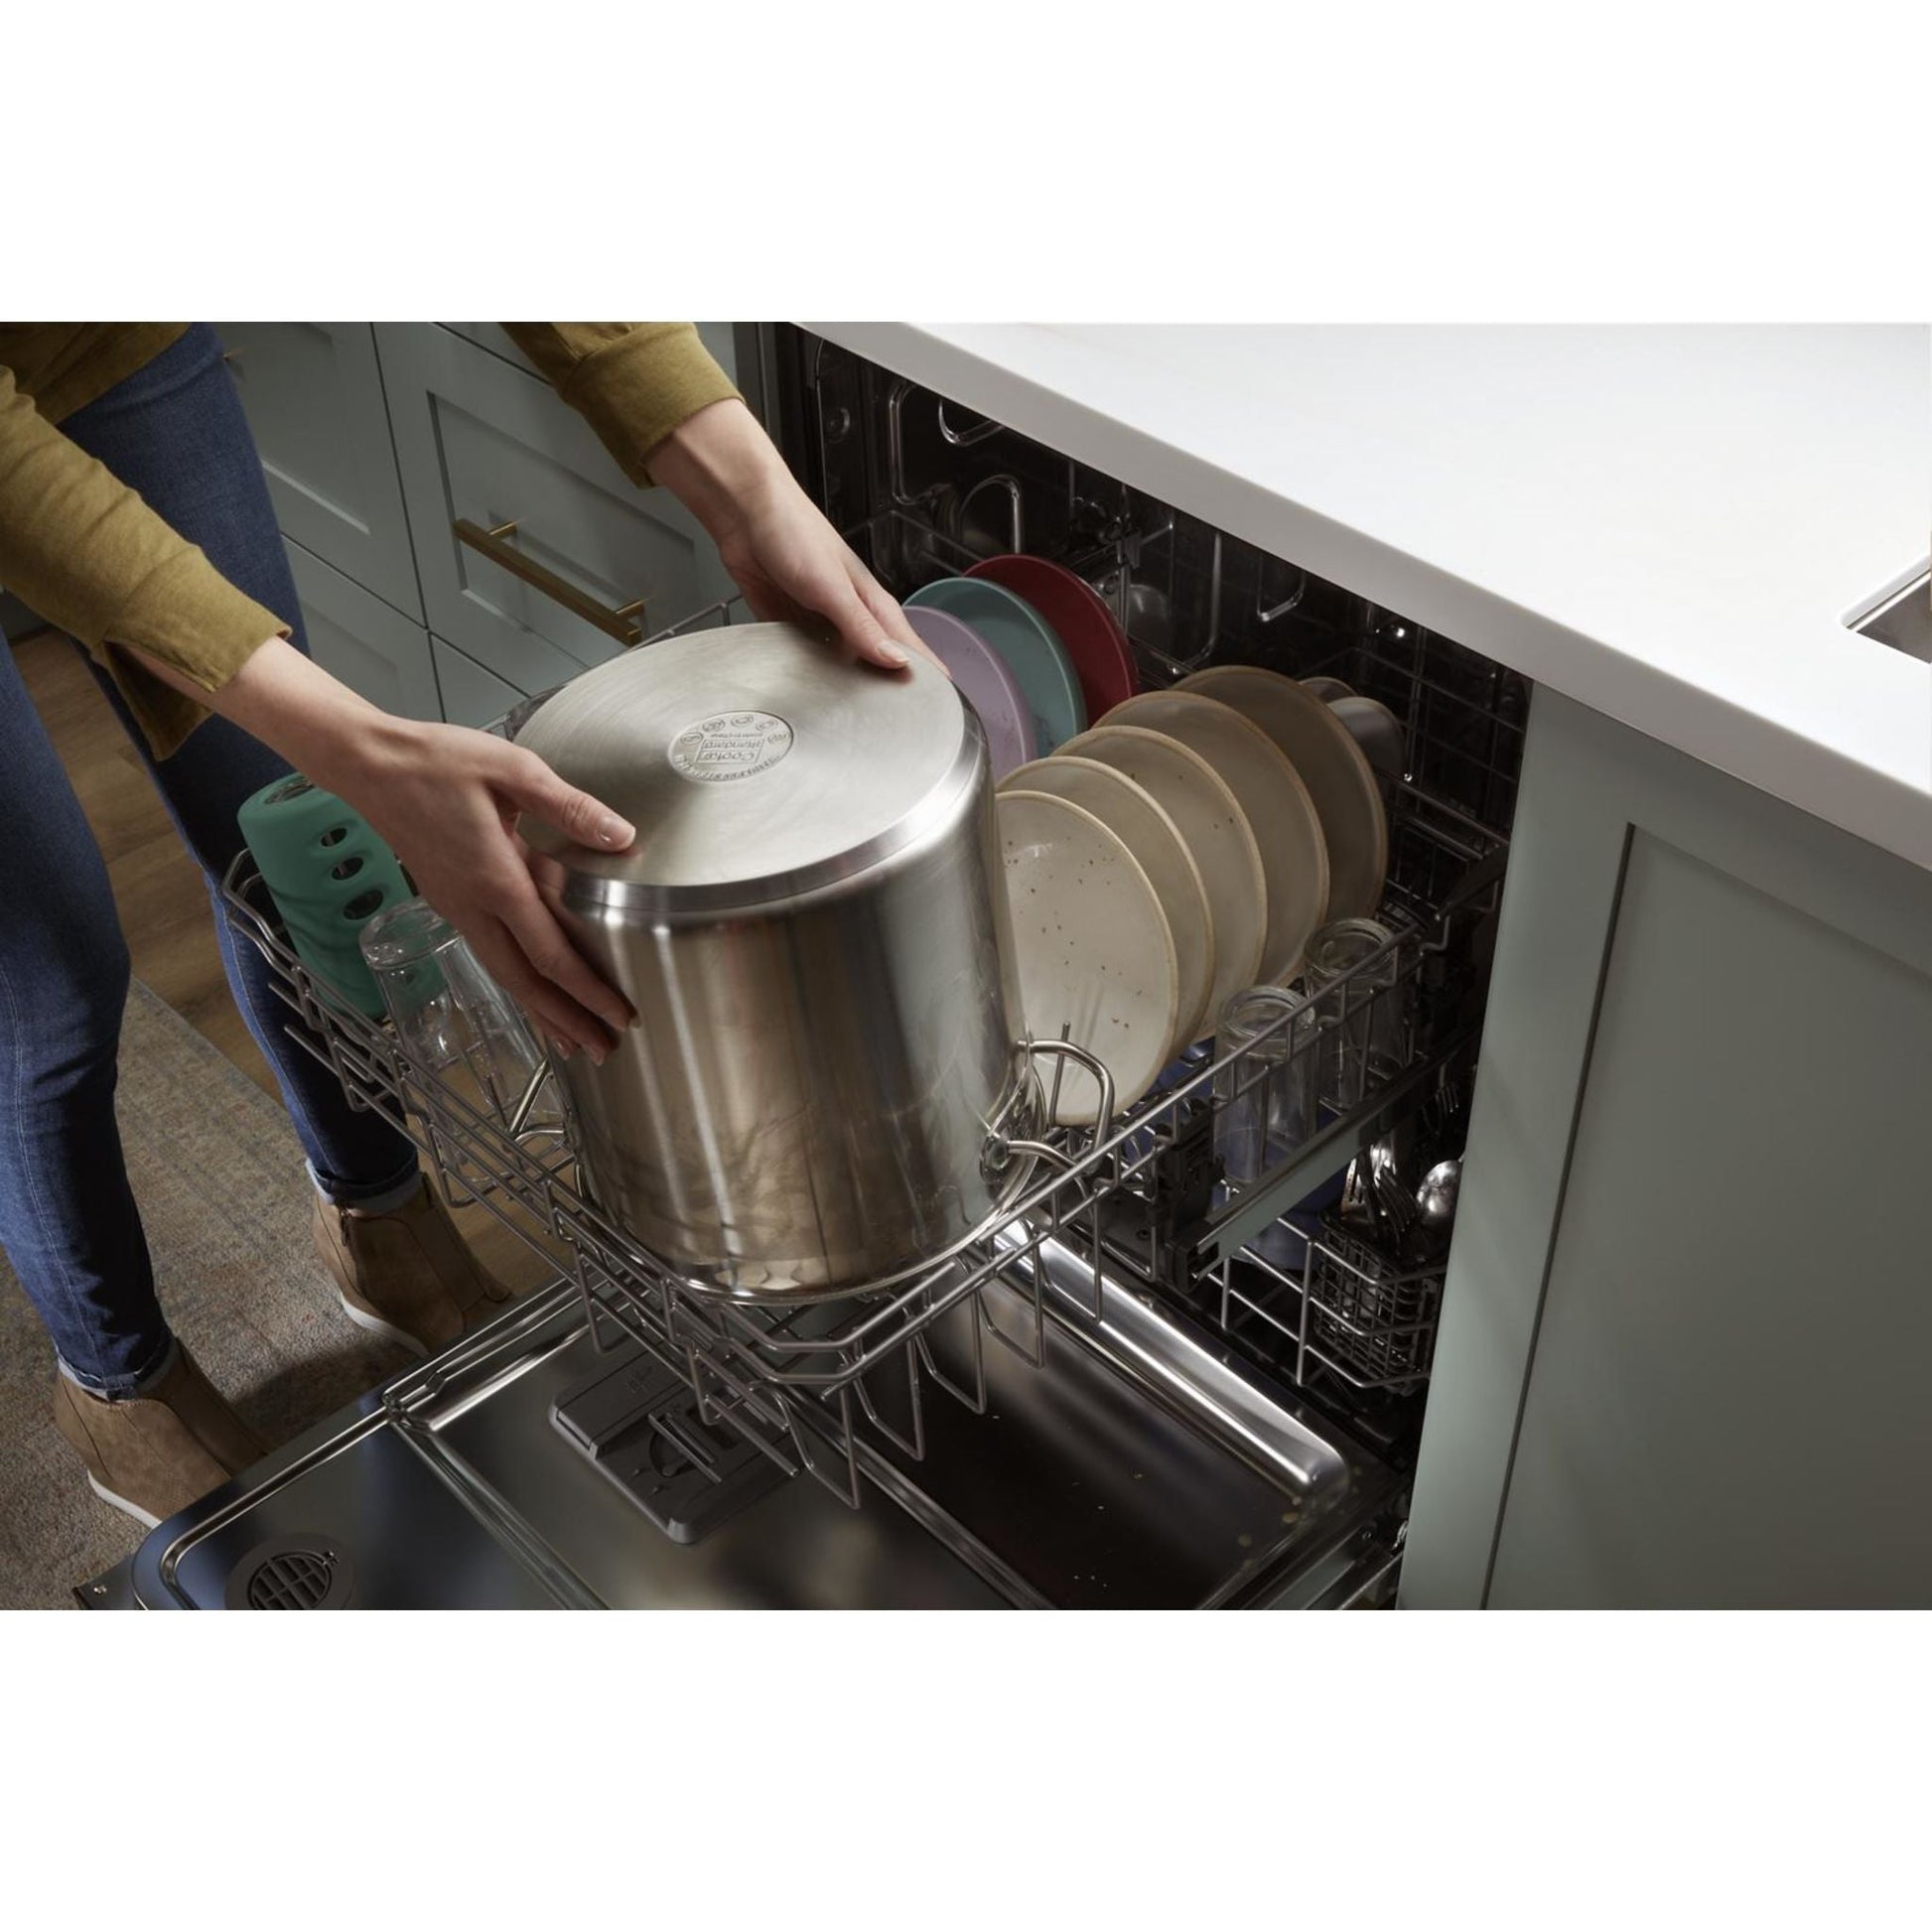 Whirlpool Dishwasher (WDT740SALB) - BLACK